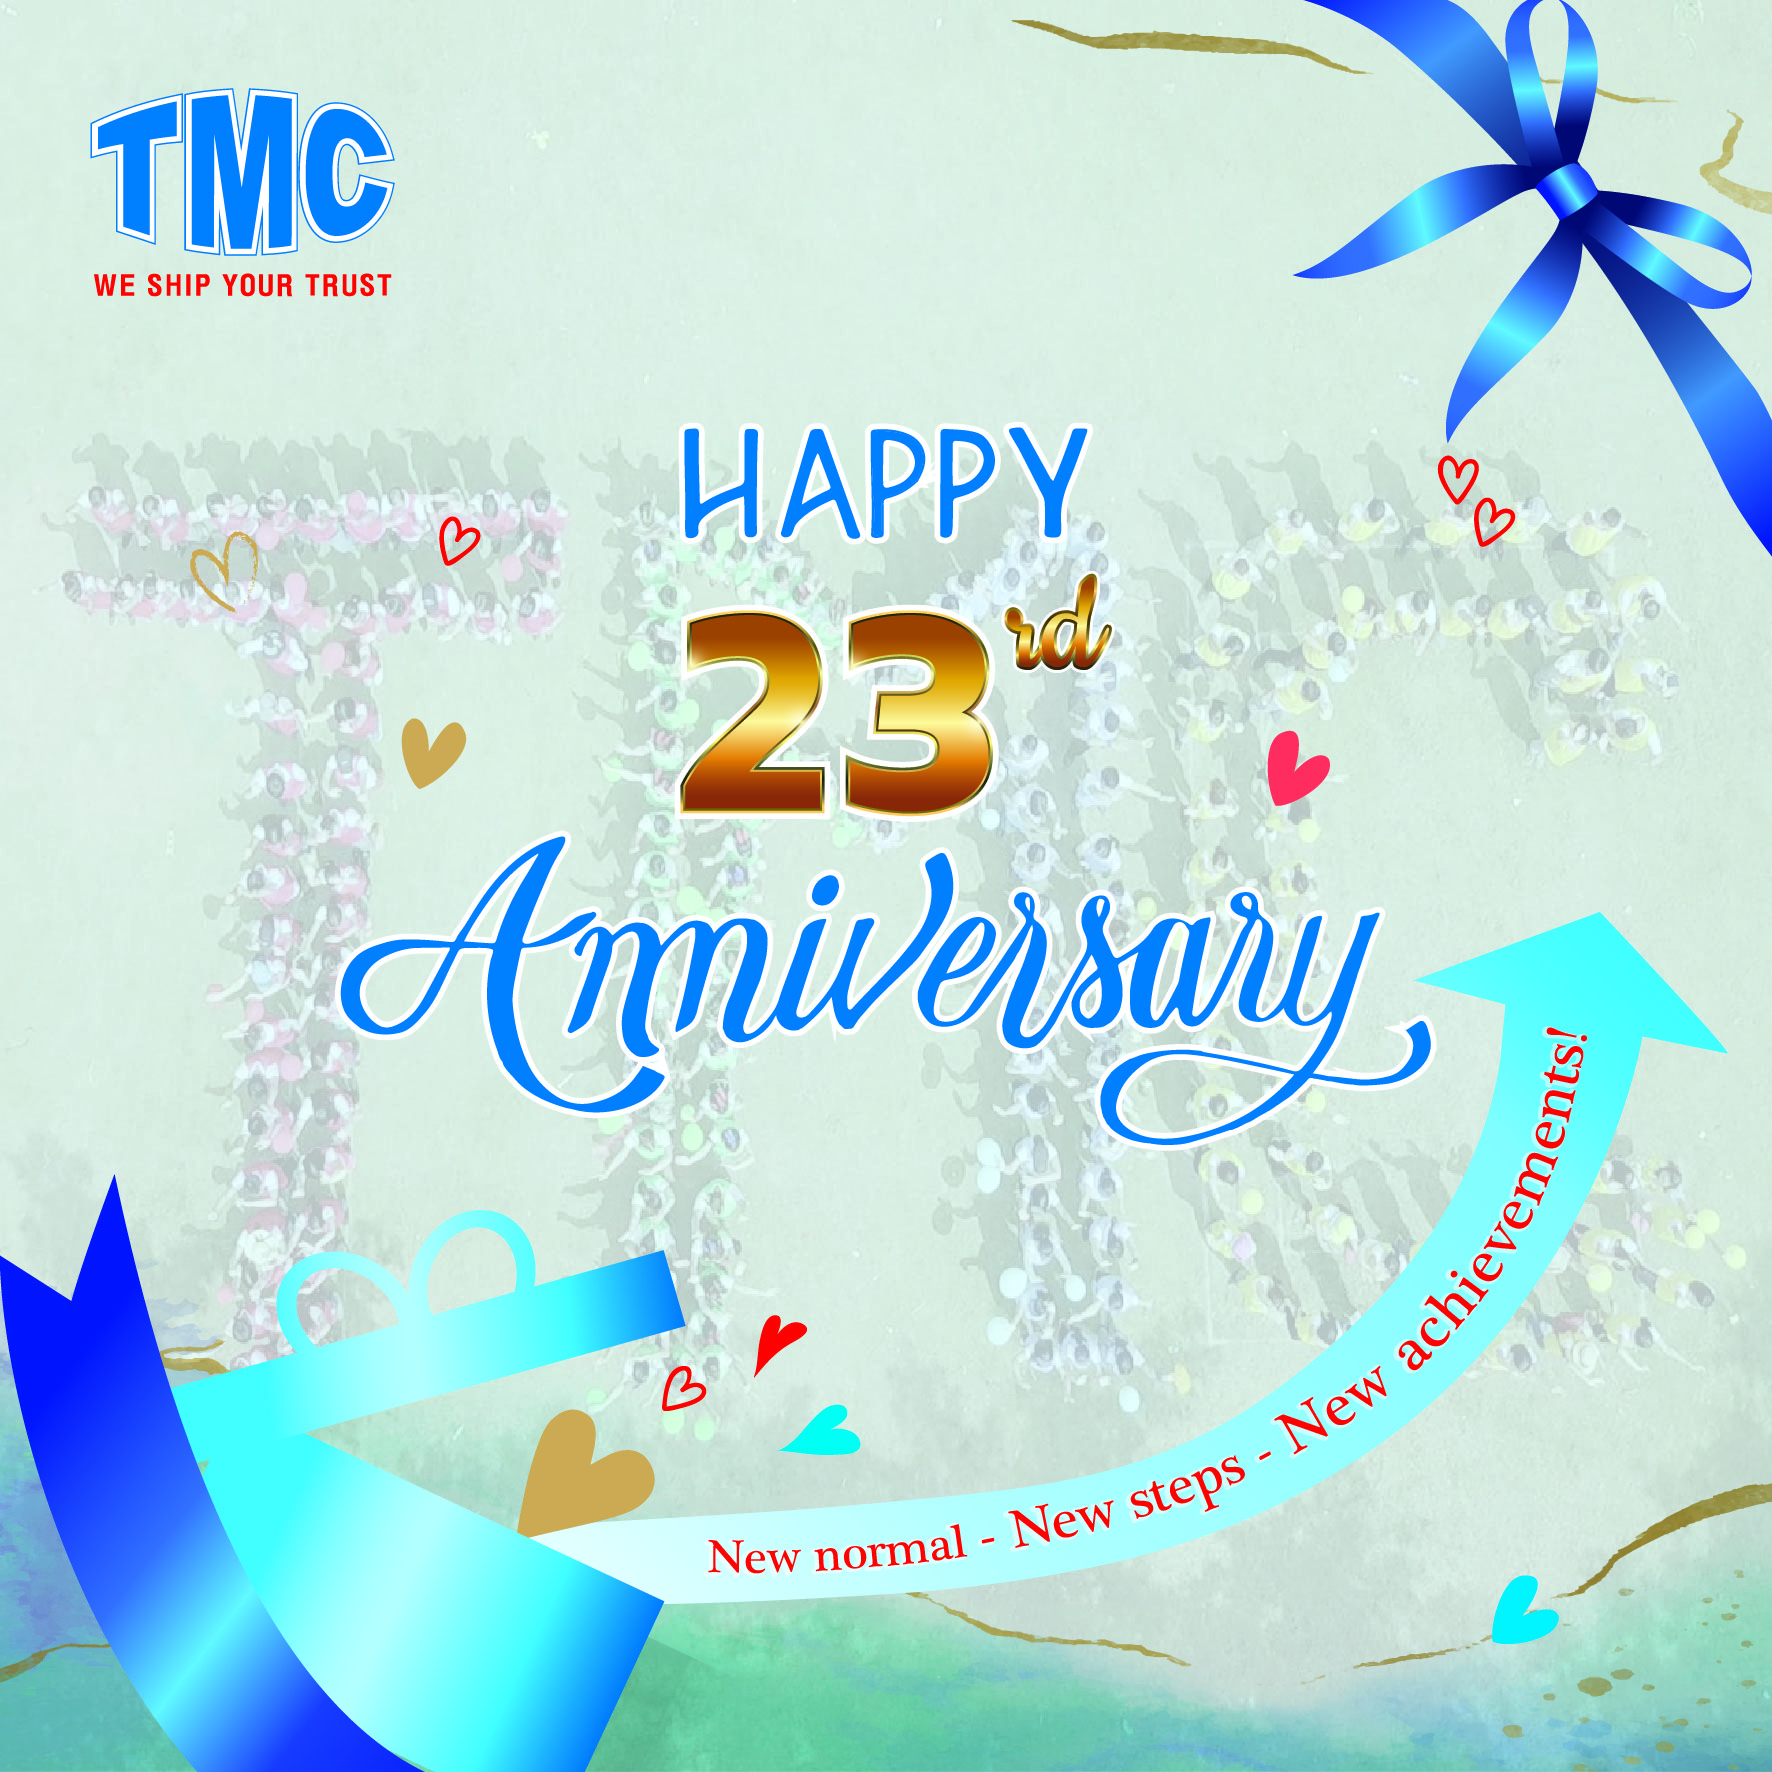 Happy TMC's 23rd anniversary